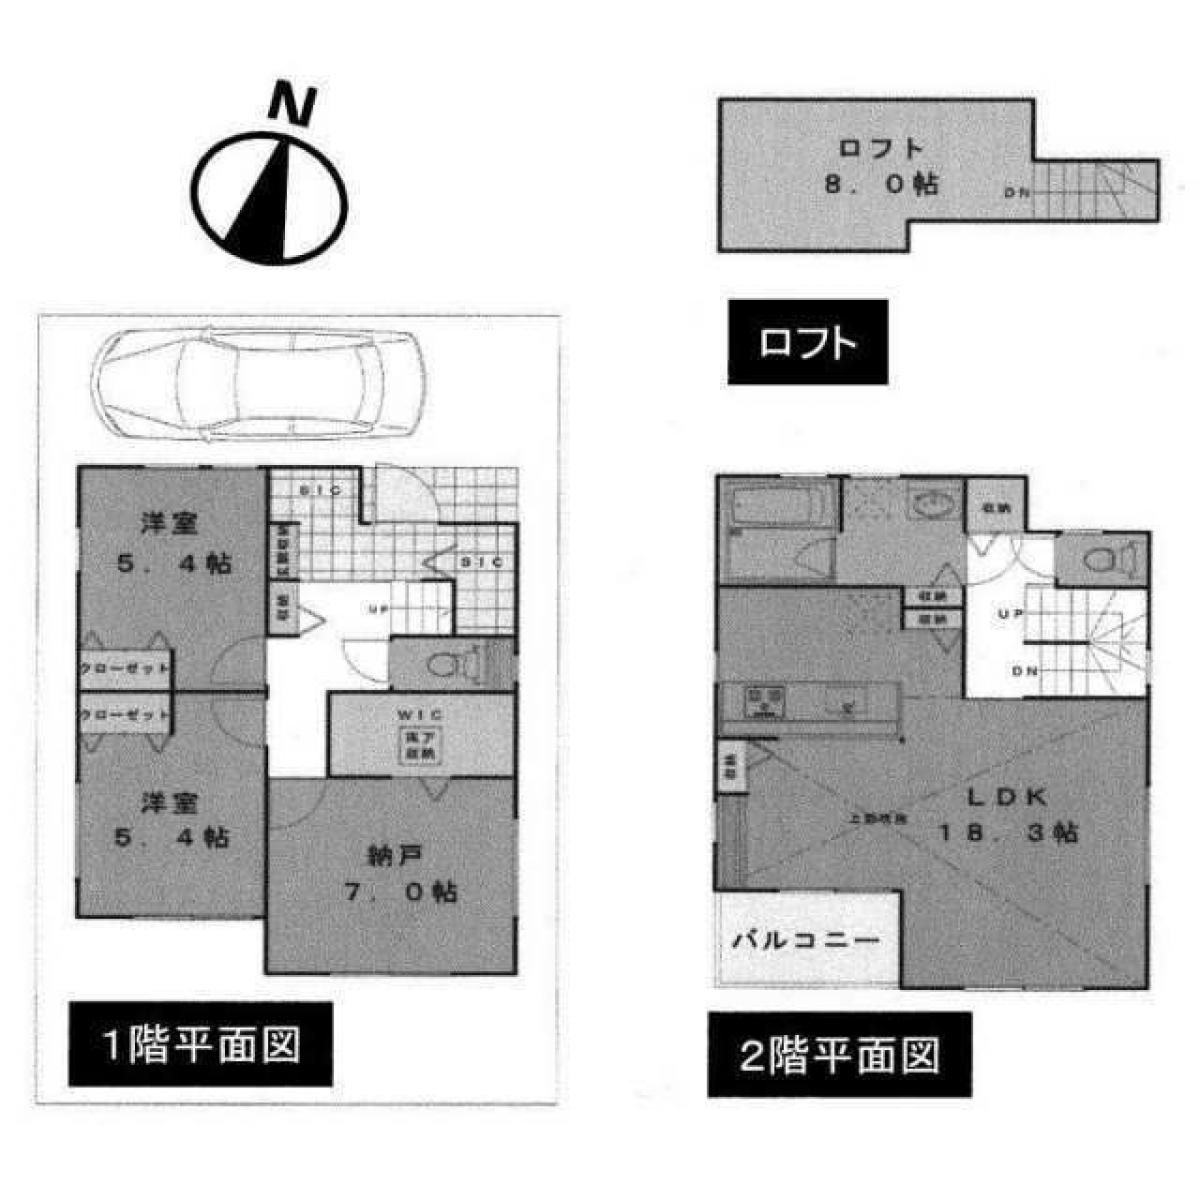 Picture of Home For Sale in Chigasaki Shi, Kanagawa, Japan